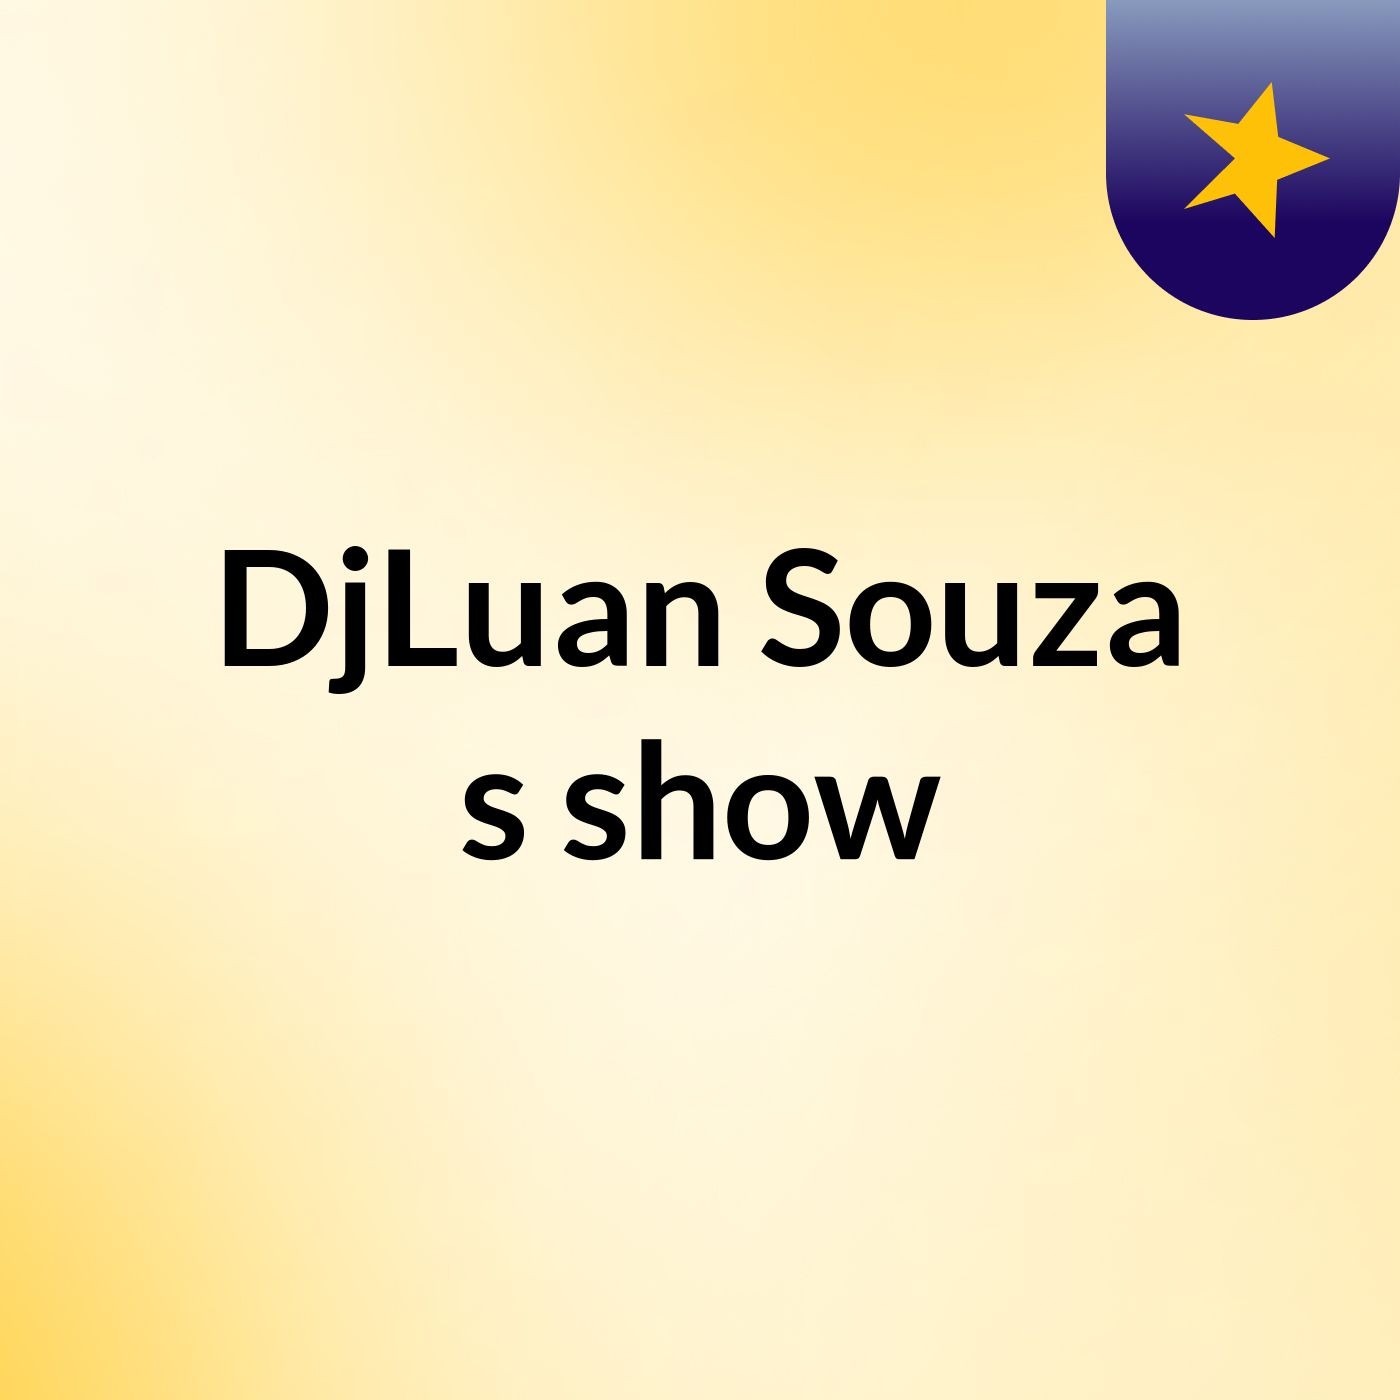 DjLuan Souza's show